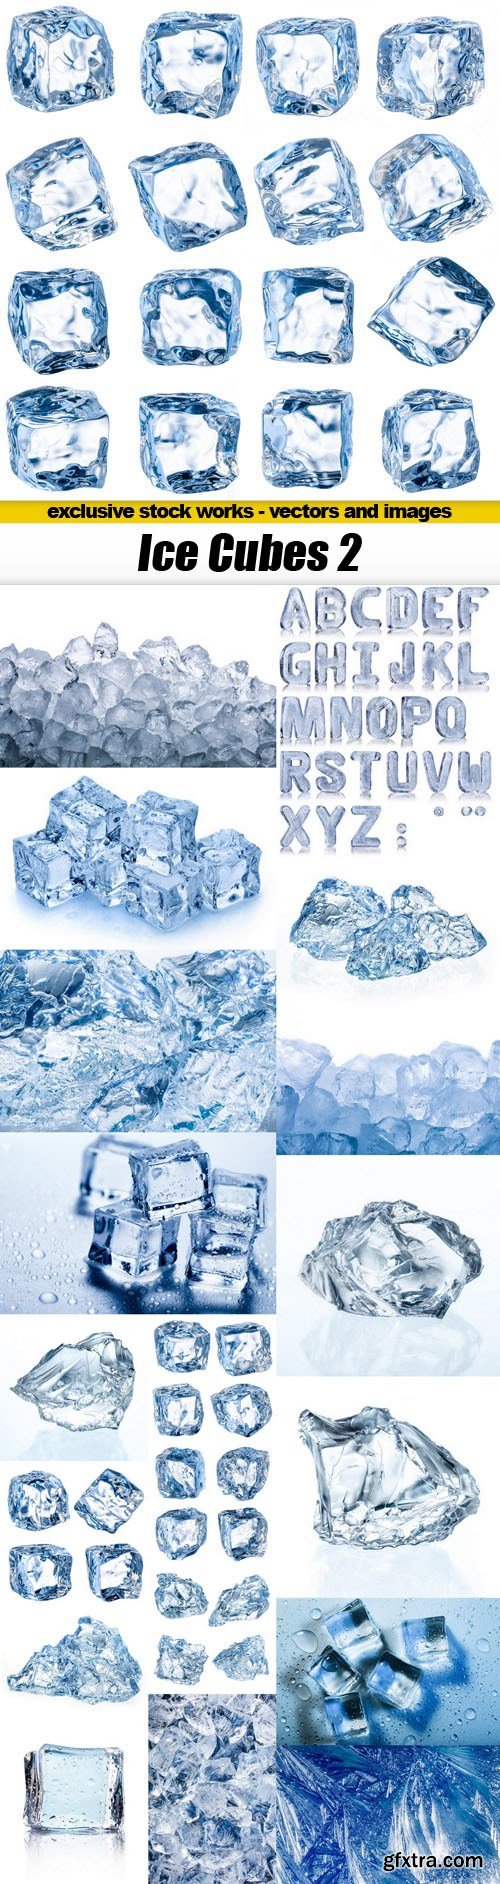 Ice Cubes 2 - 20xUHQ JPEG